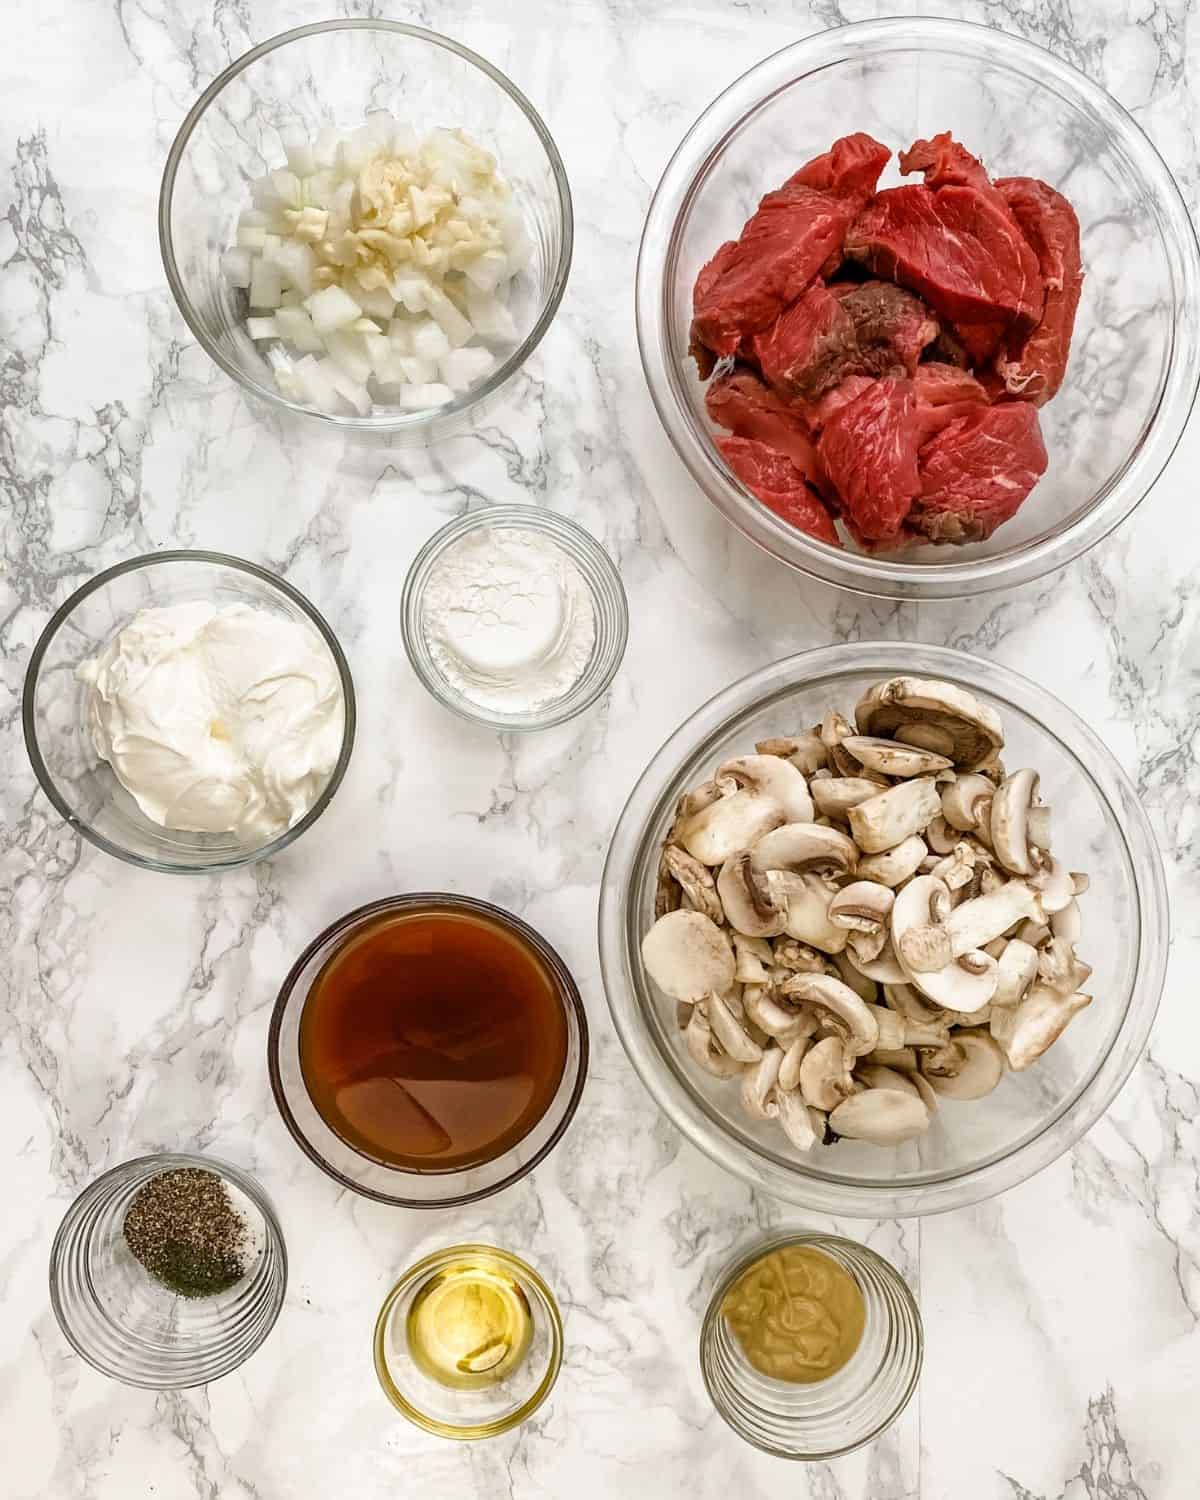 ingredients to make beef stroganoff in the crockpot.